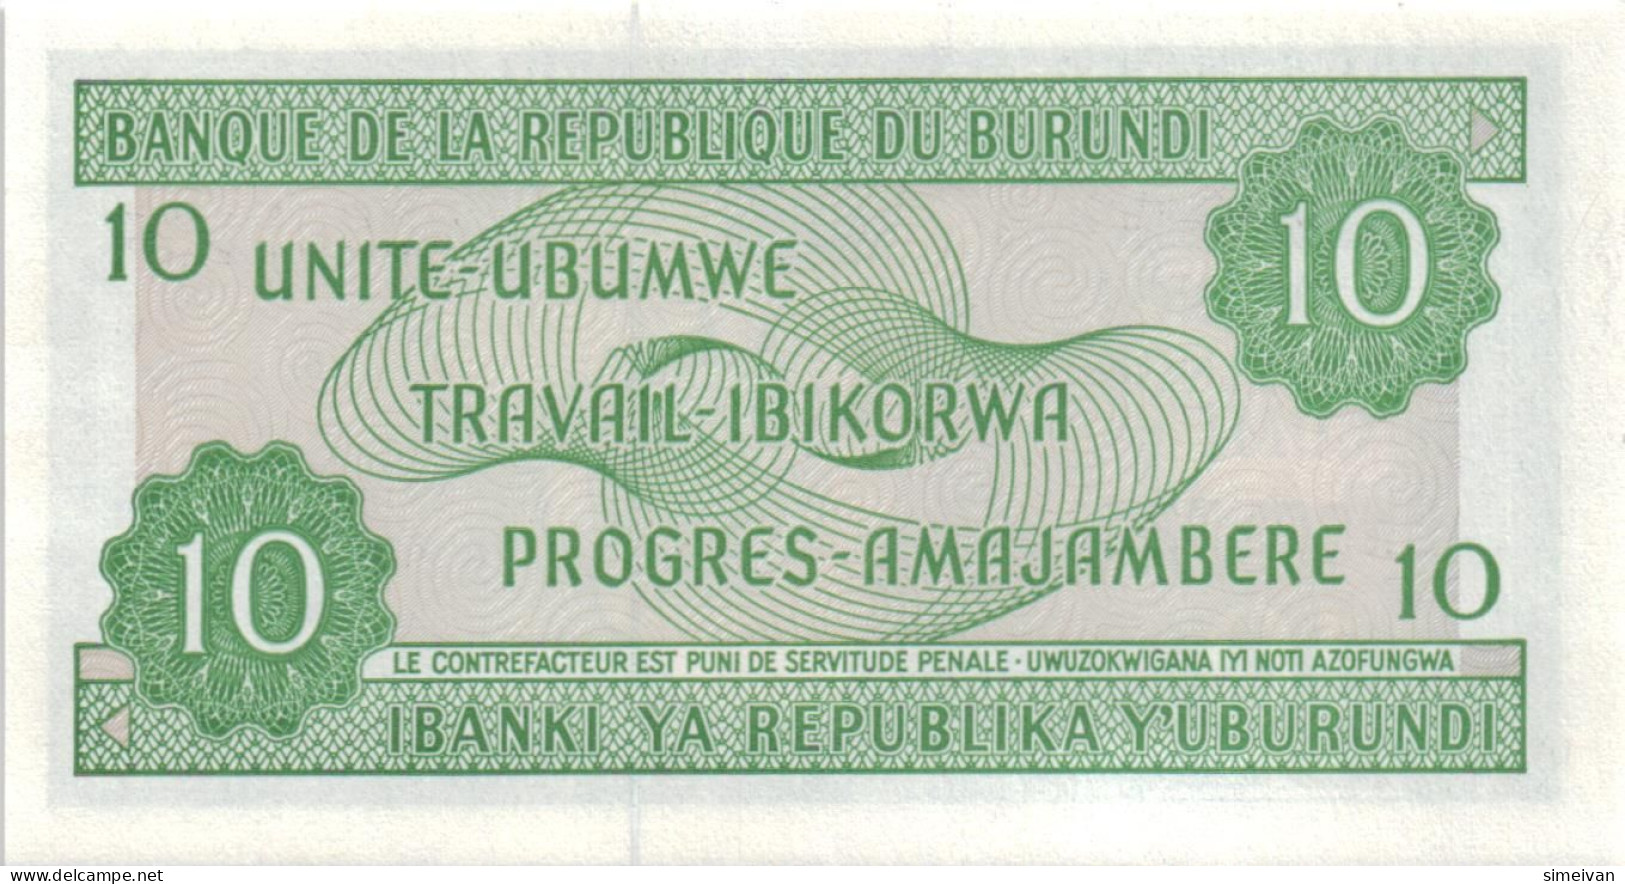 Burundi 10 Francs 2005 P-33e UNC  #4802 - Burundi